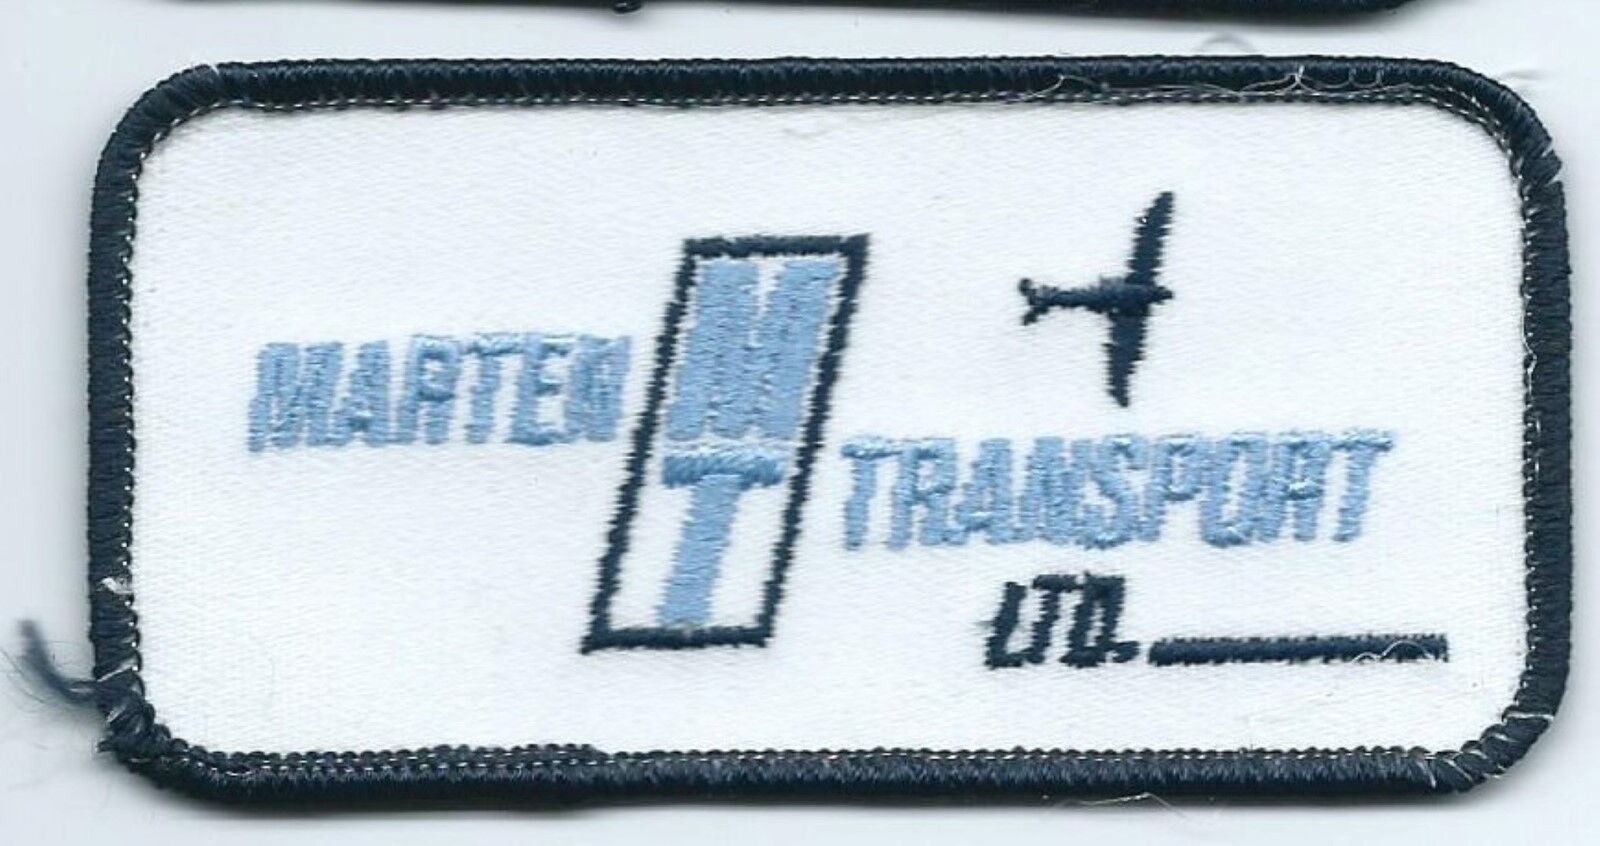 Marten Transport Ltd MT driver patch Mondovi WI 2 X 4 #2407